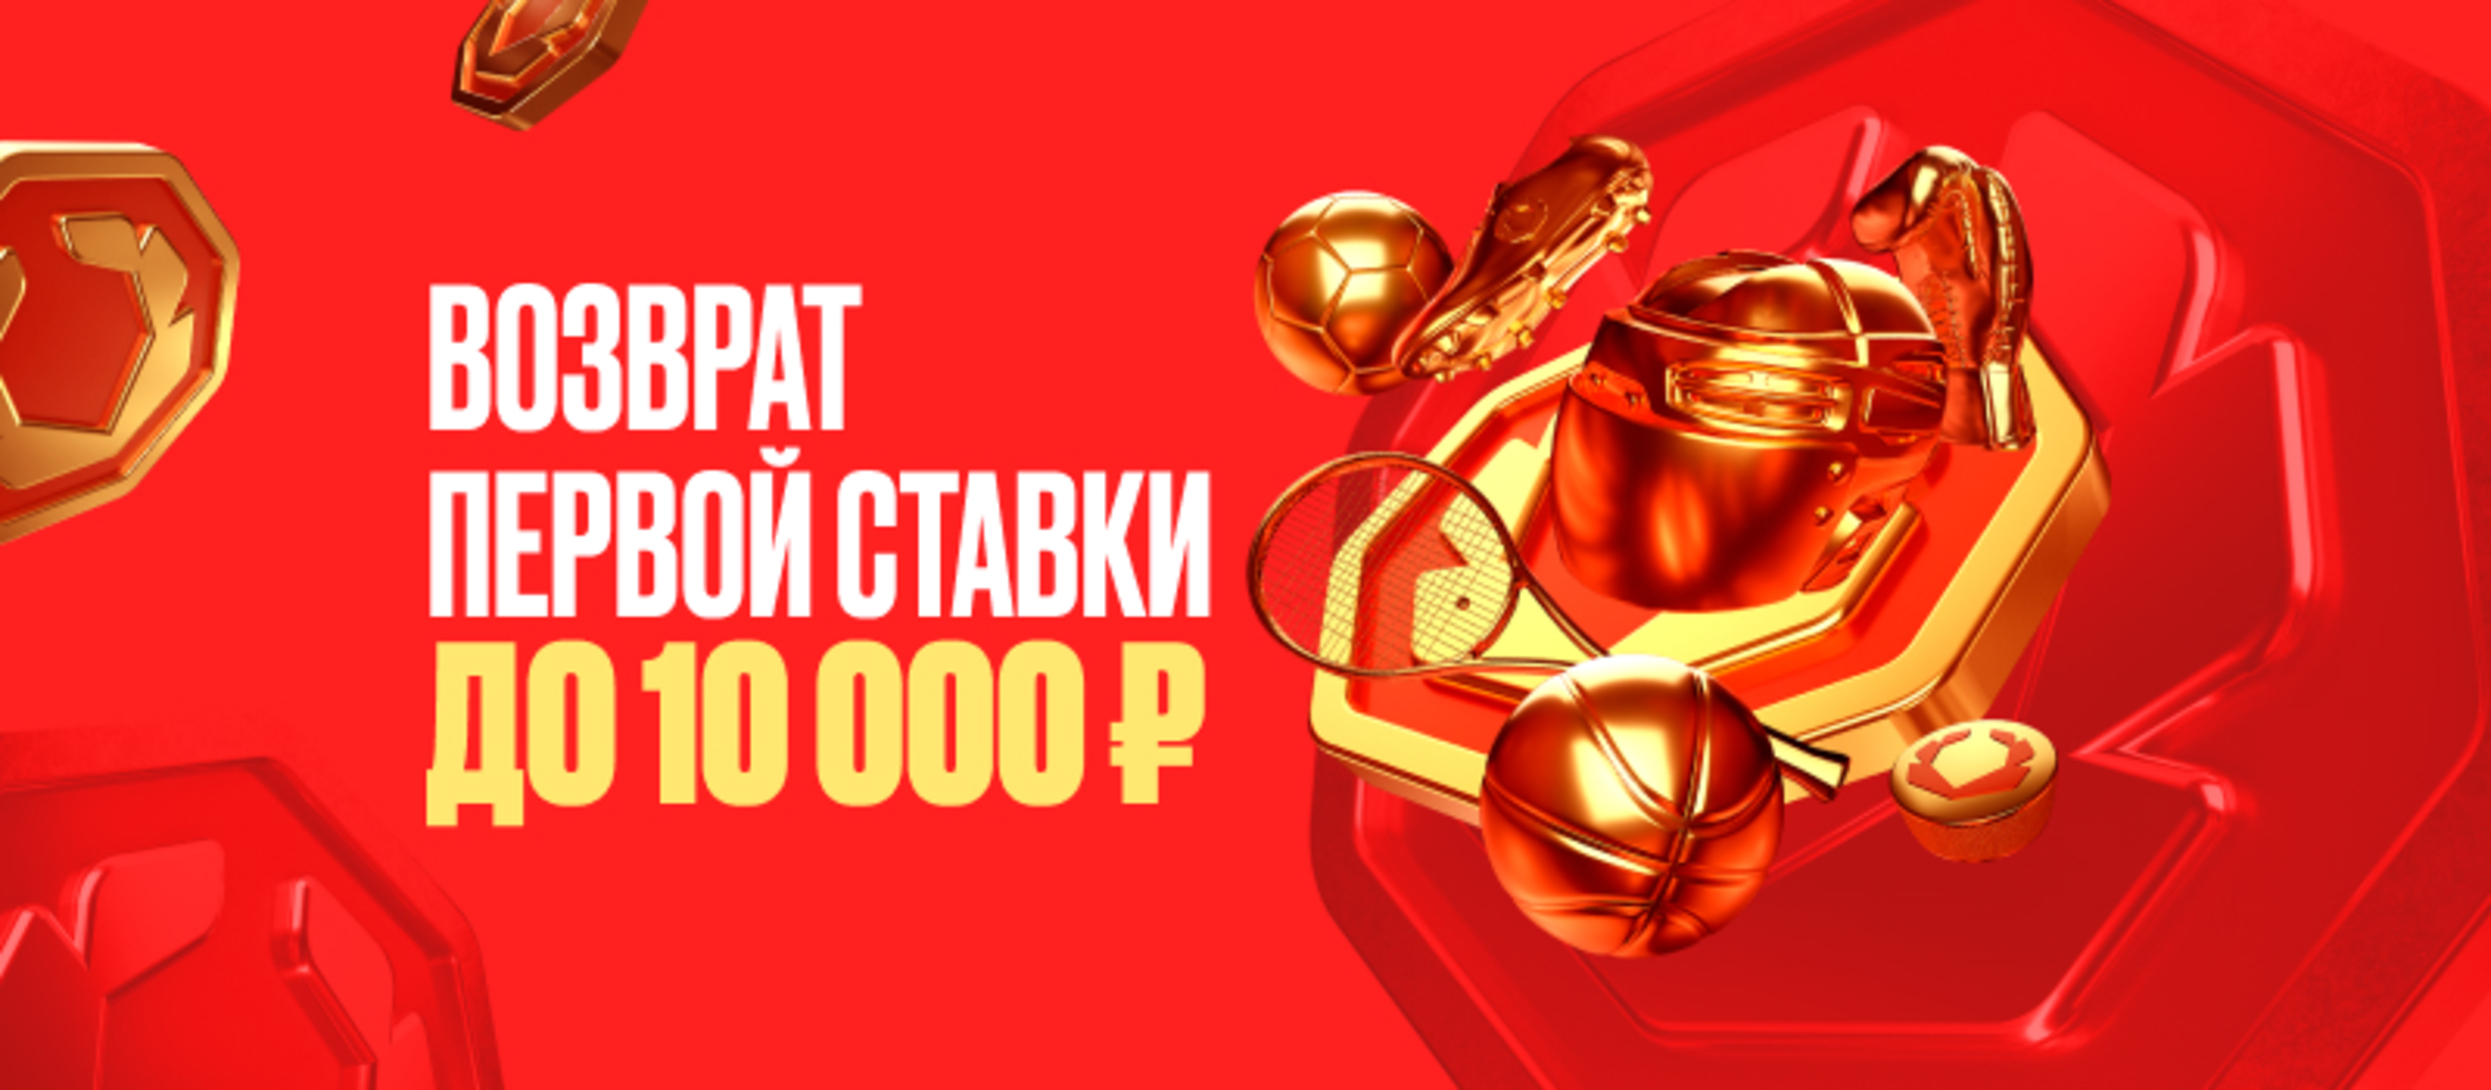 OLIMPBET застрахует первую ставку на сумму до 10000 рублей